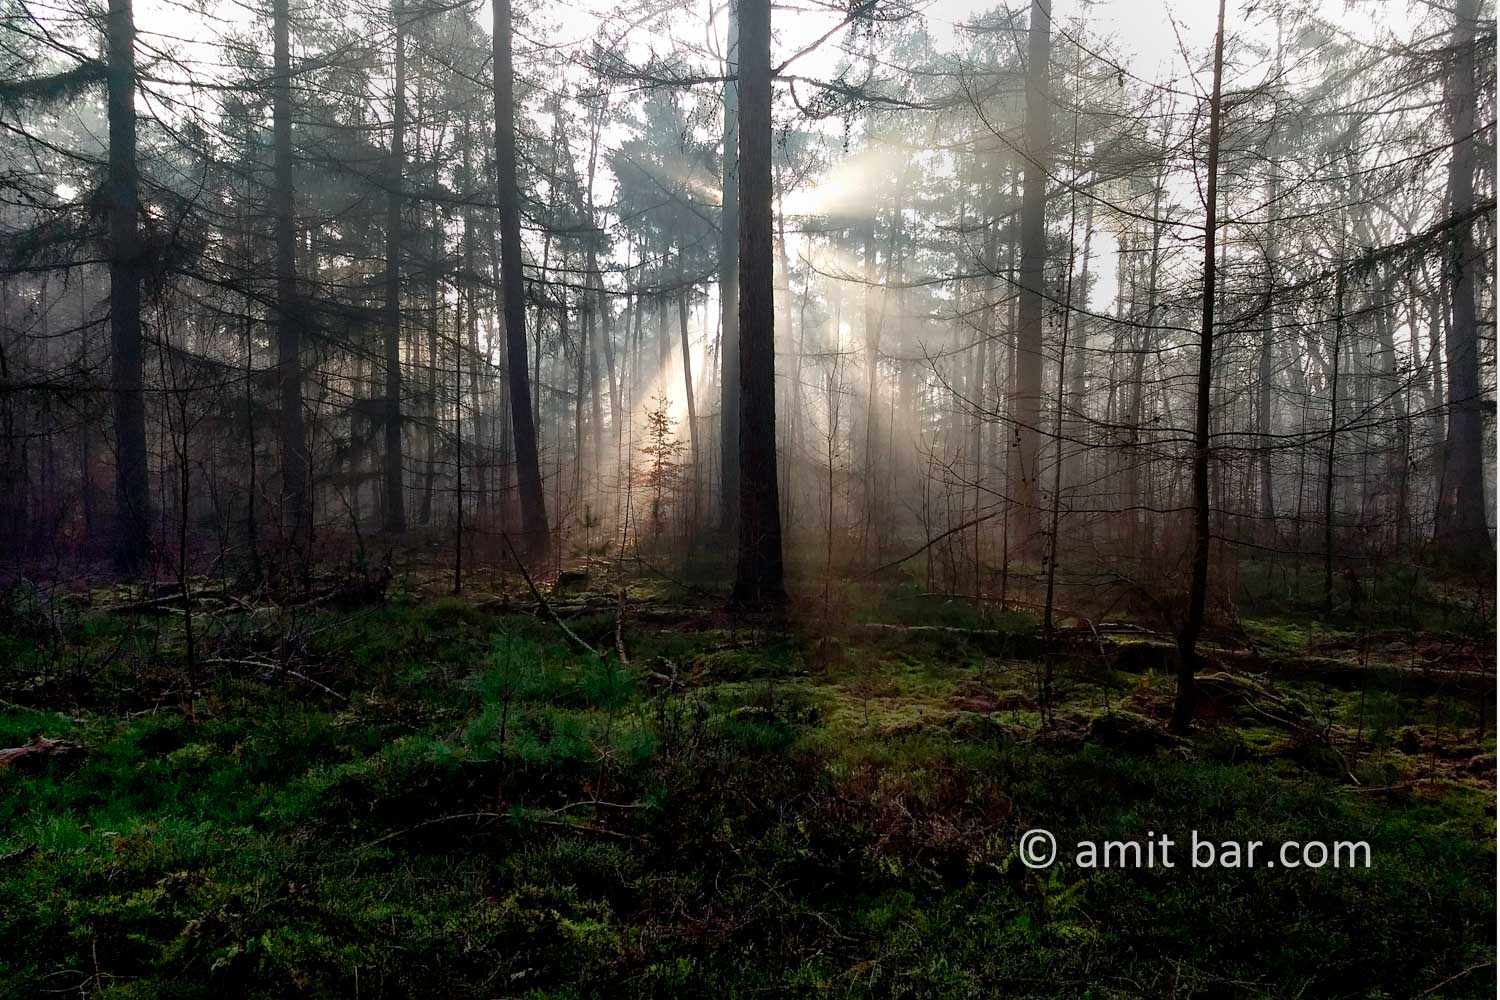 Misty forest I: Misty forest beside Laag-Soeren, The Netherlands